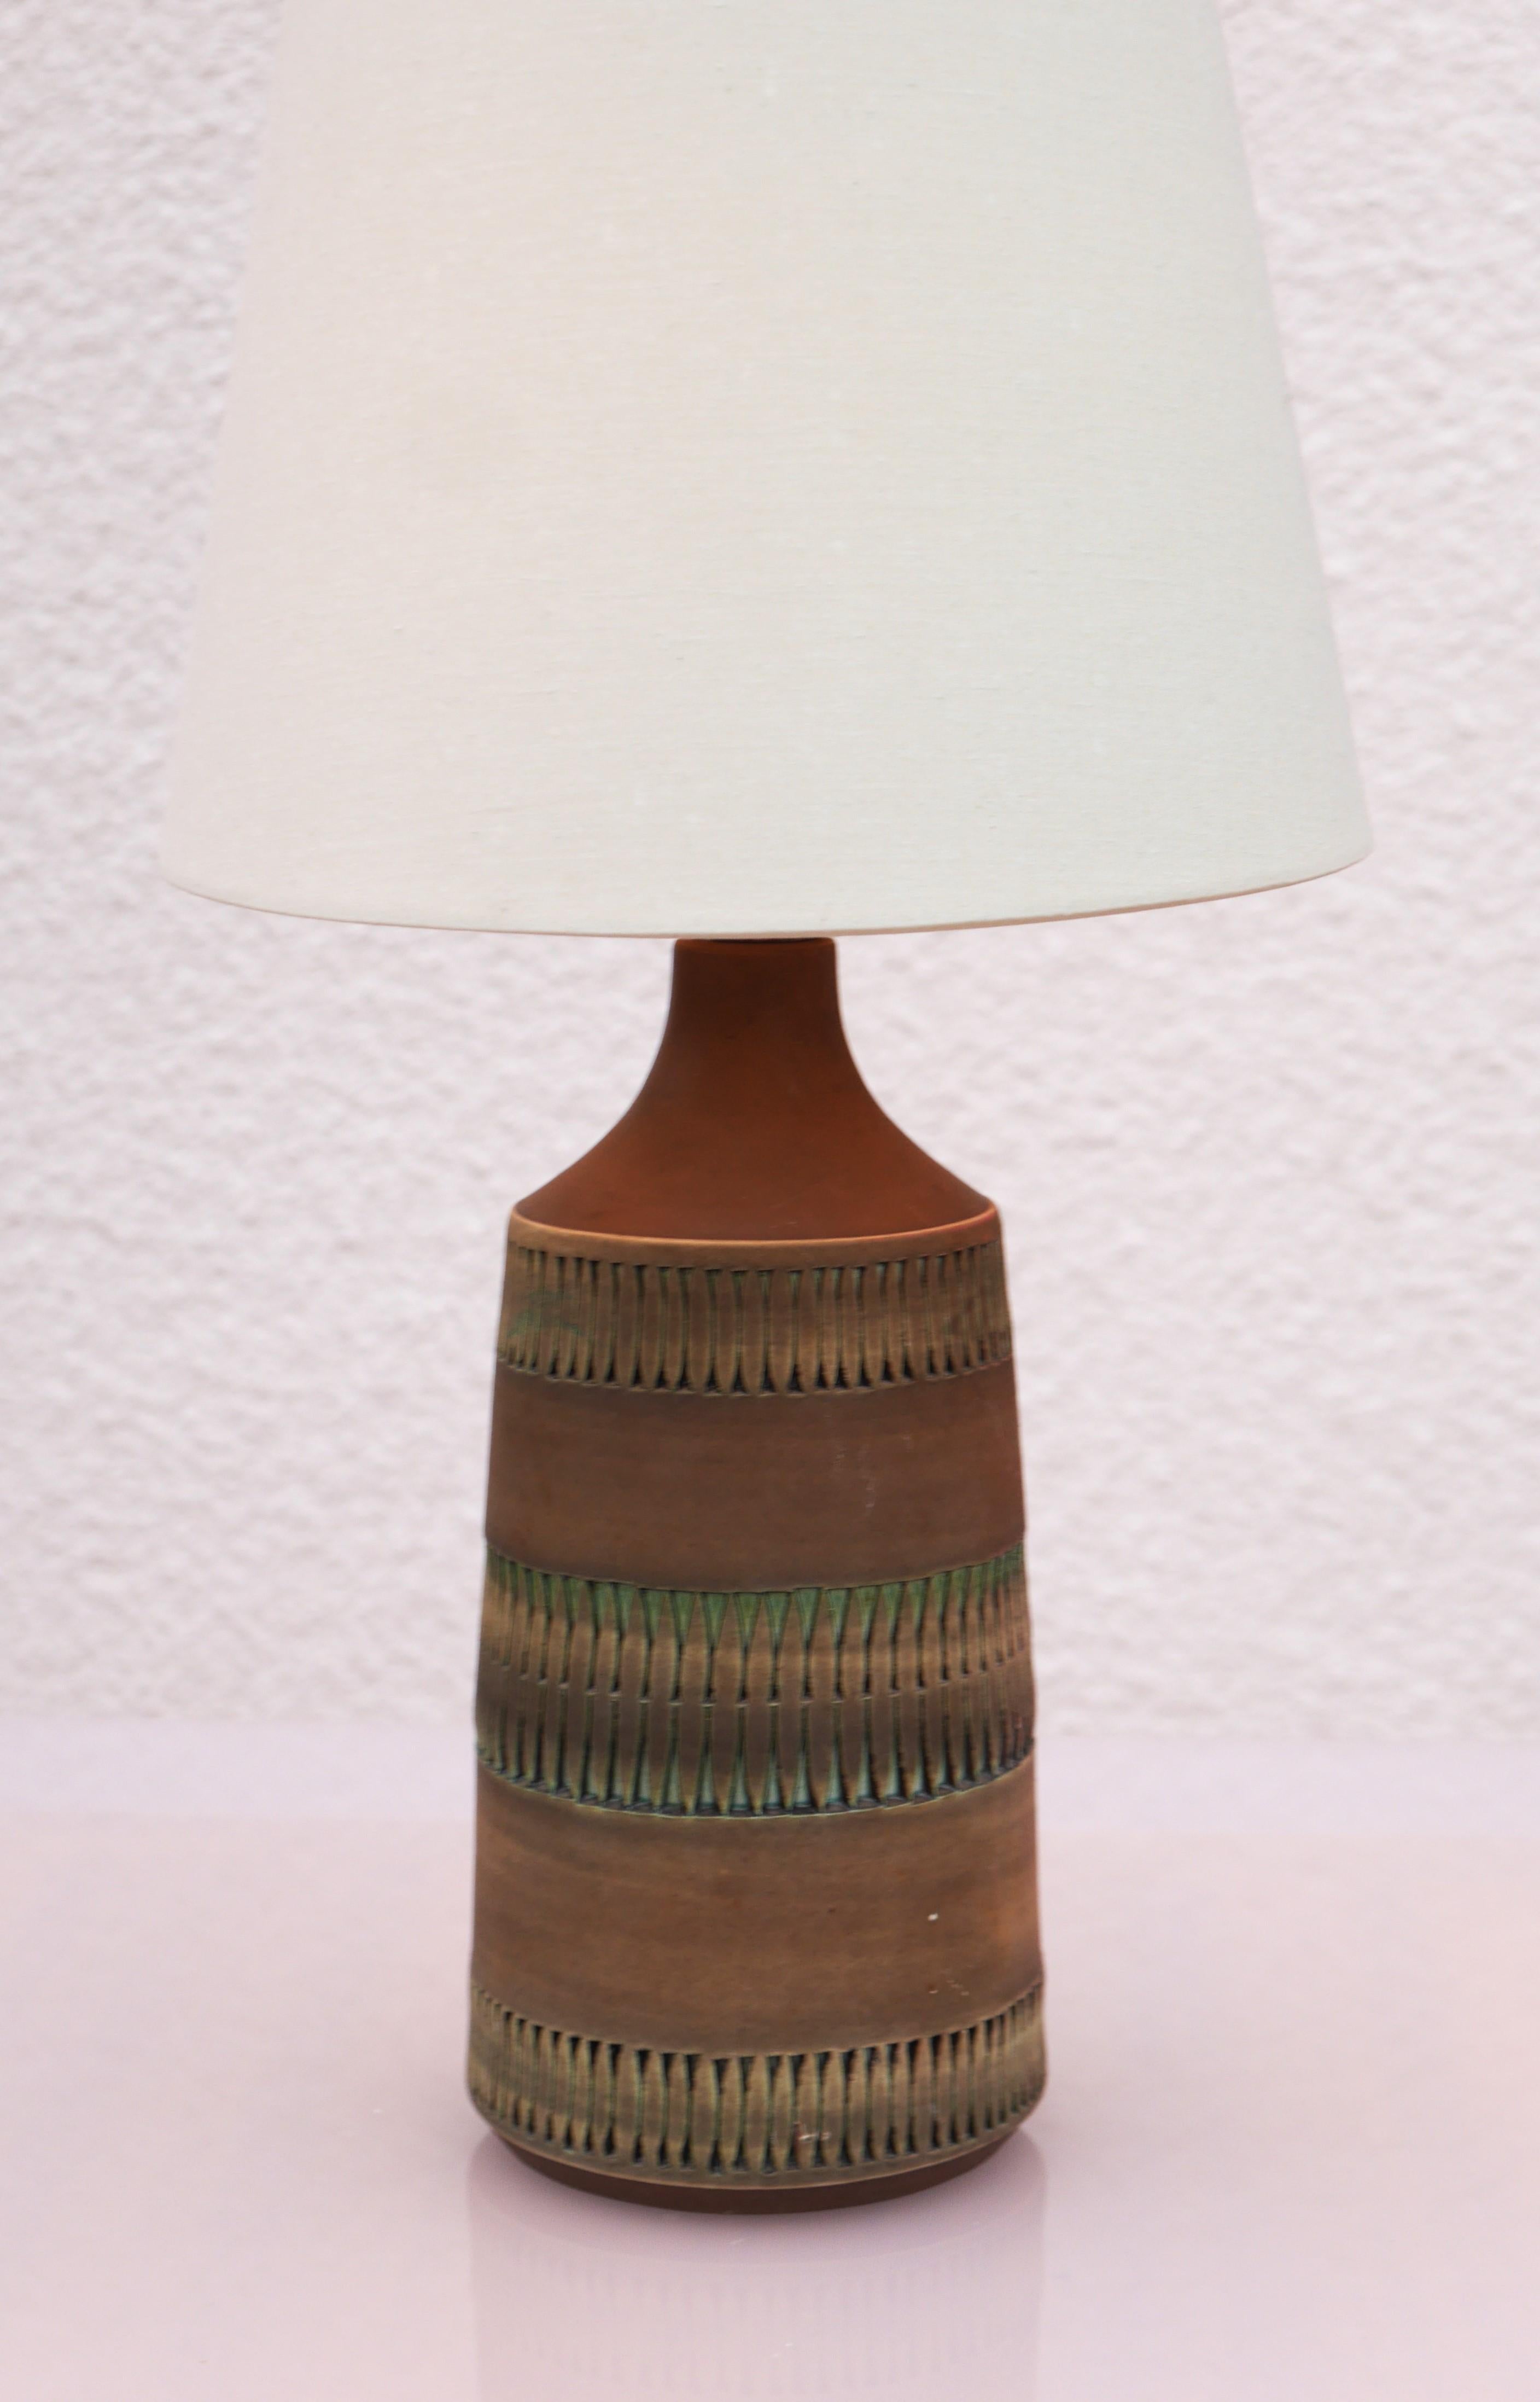 Swedish Ceramic Lamp Base from Alingsås, Sweden